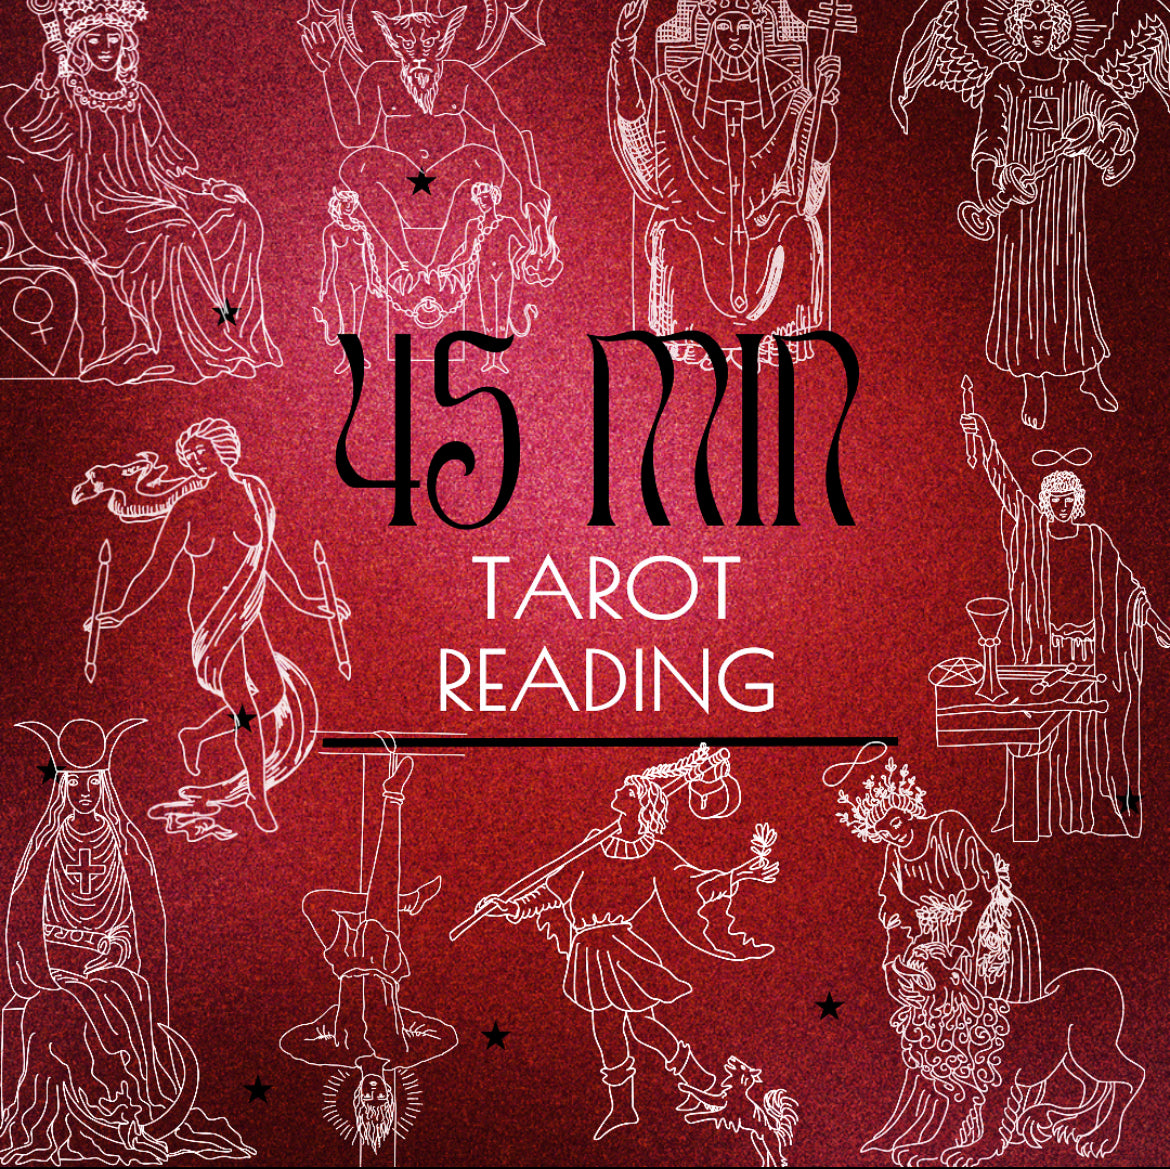 45 Min: Tarot Reading